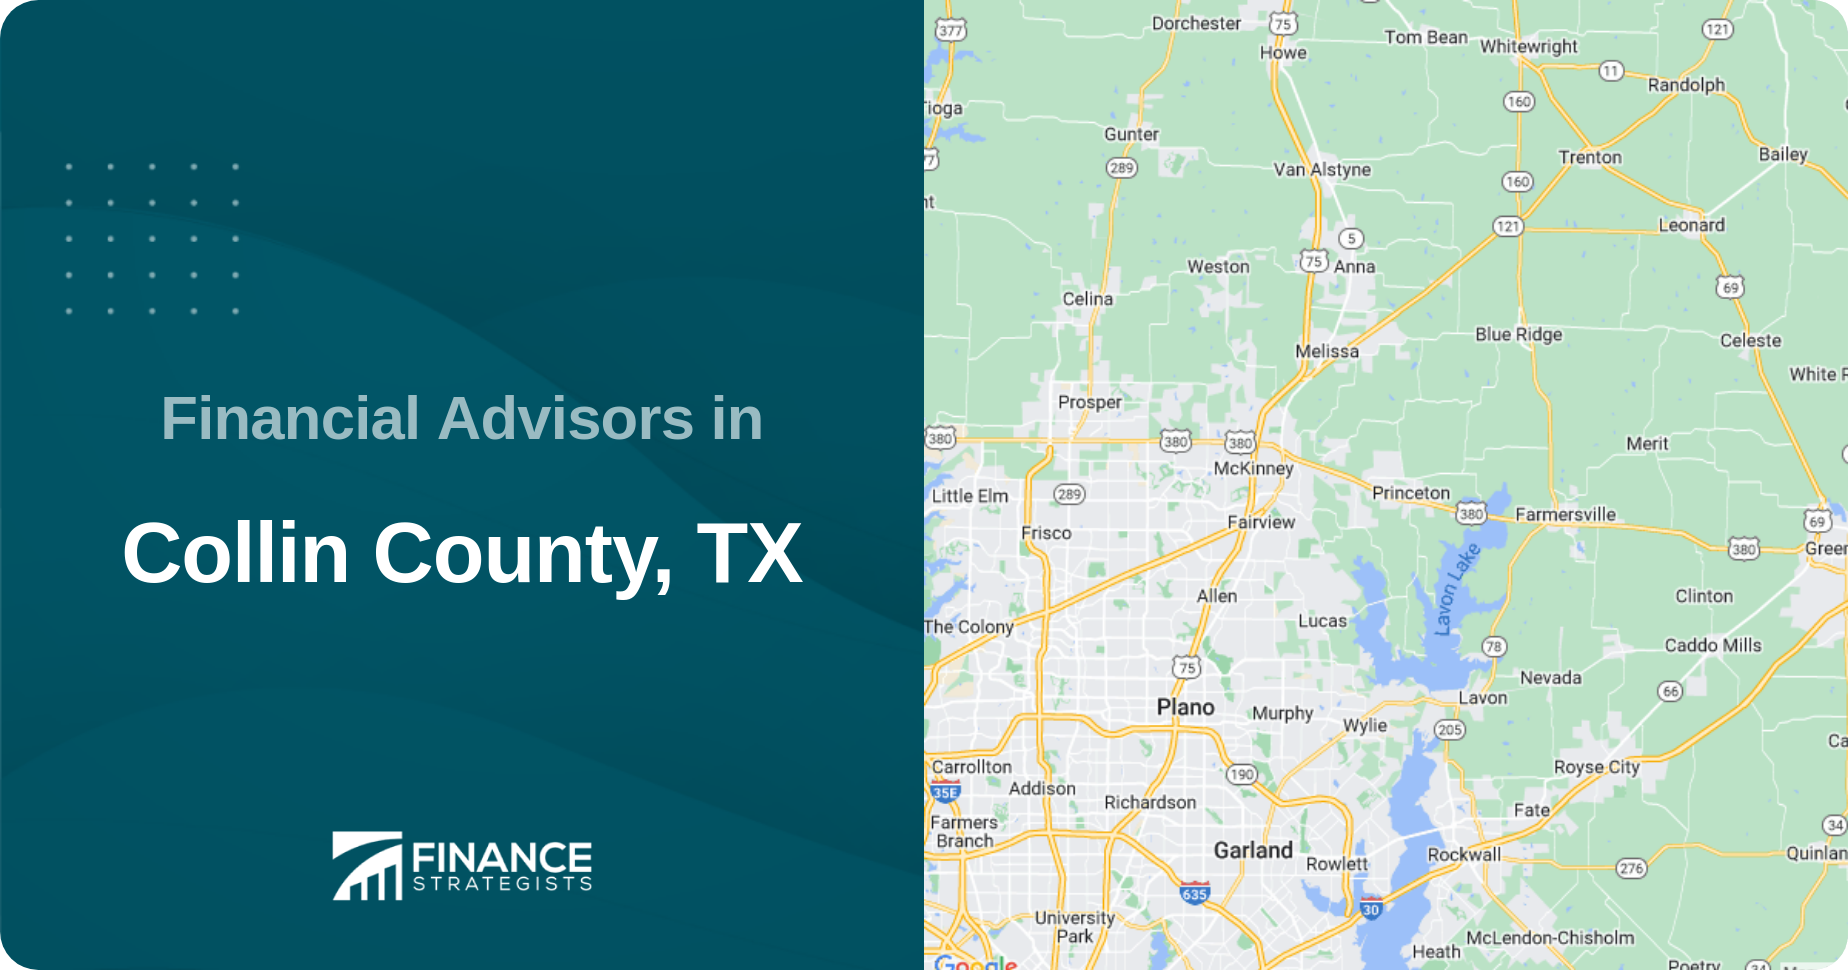 Financial Advisors in Collin County, TX